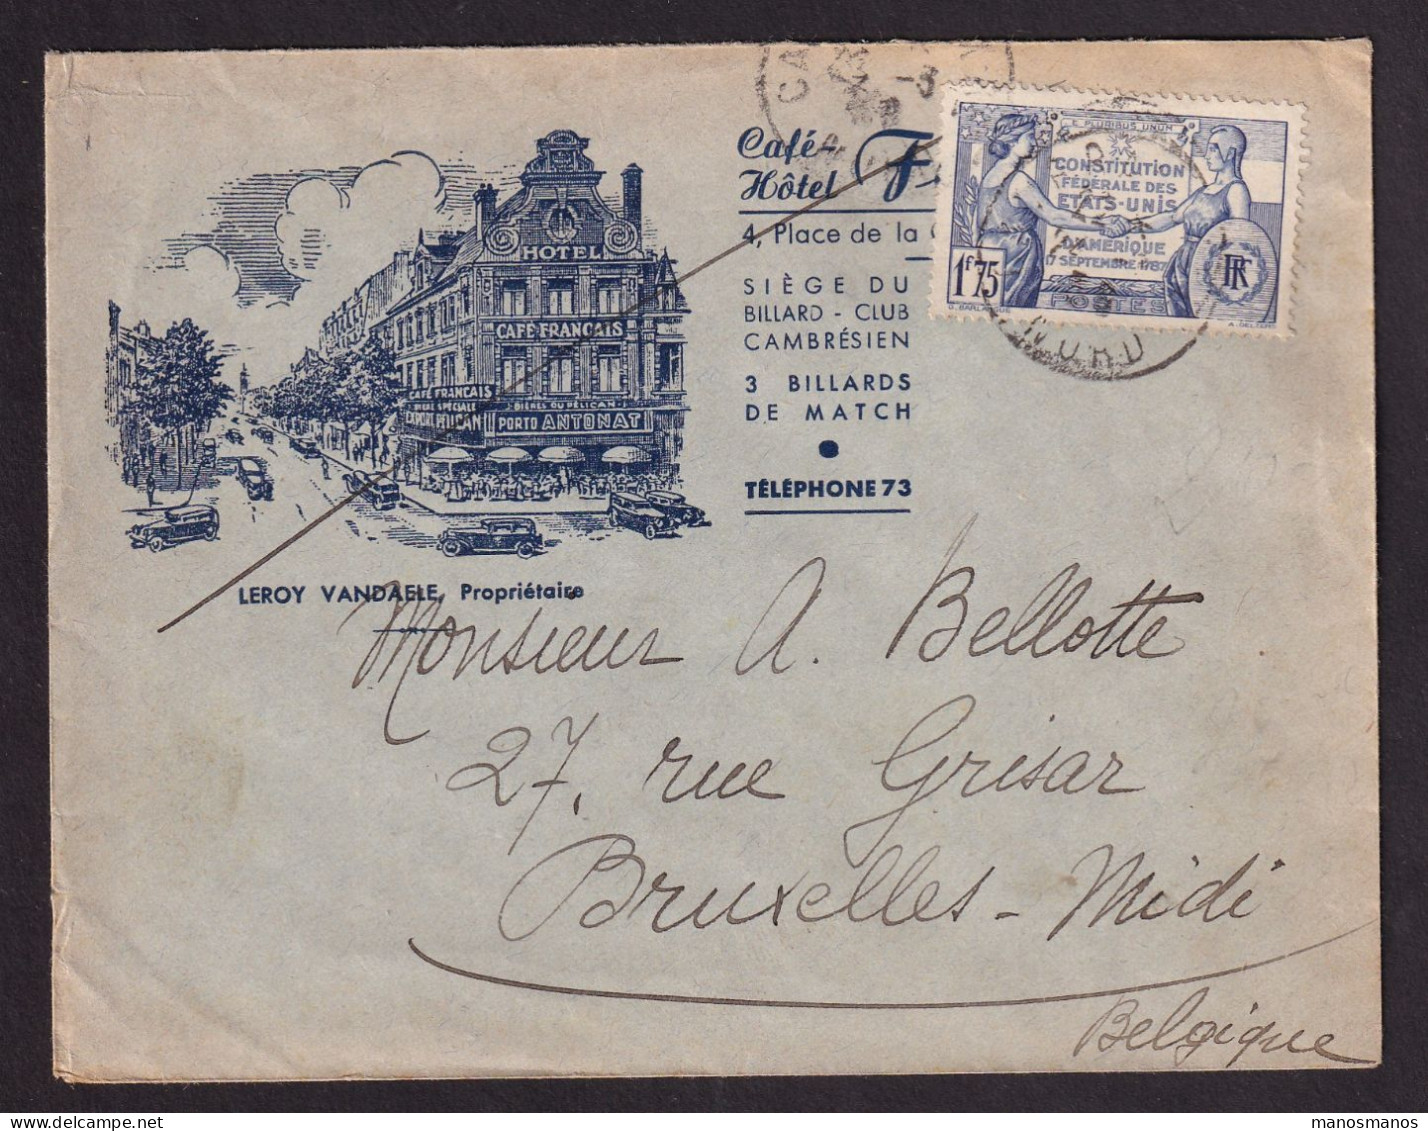 DDGG 039 - Enveloppe Illustrée "Hotel Français" TP 357 CAMBRAY 1938 Vers Bruxelles - Briefe U. Dokumente